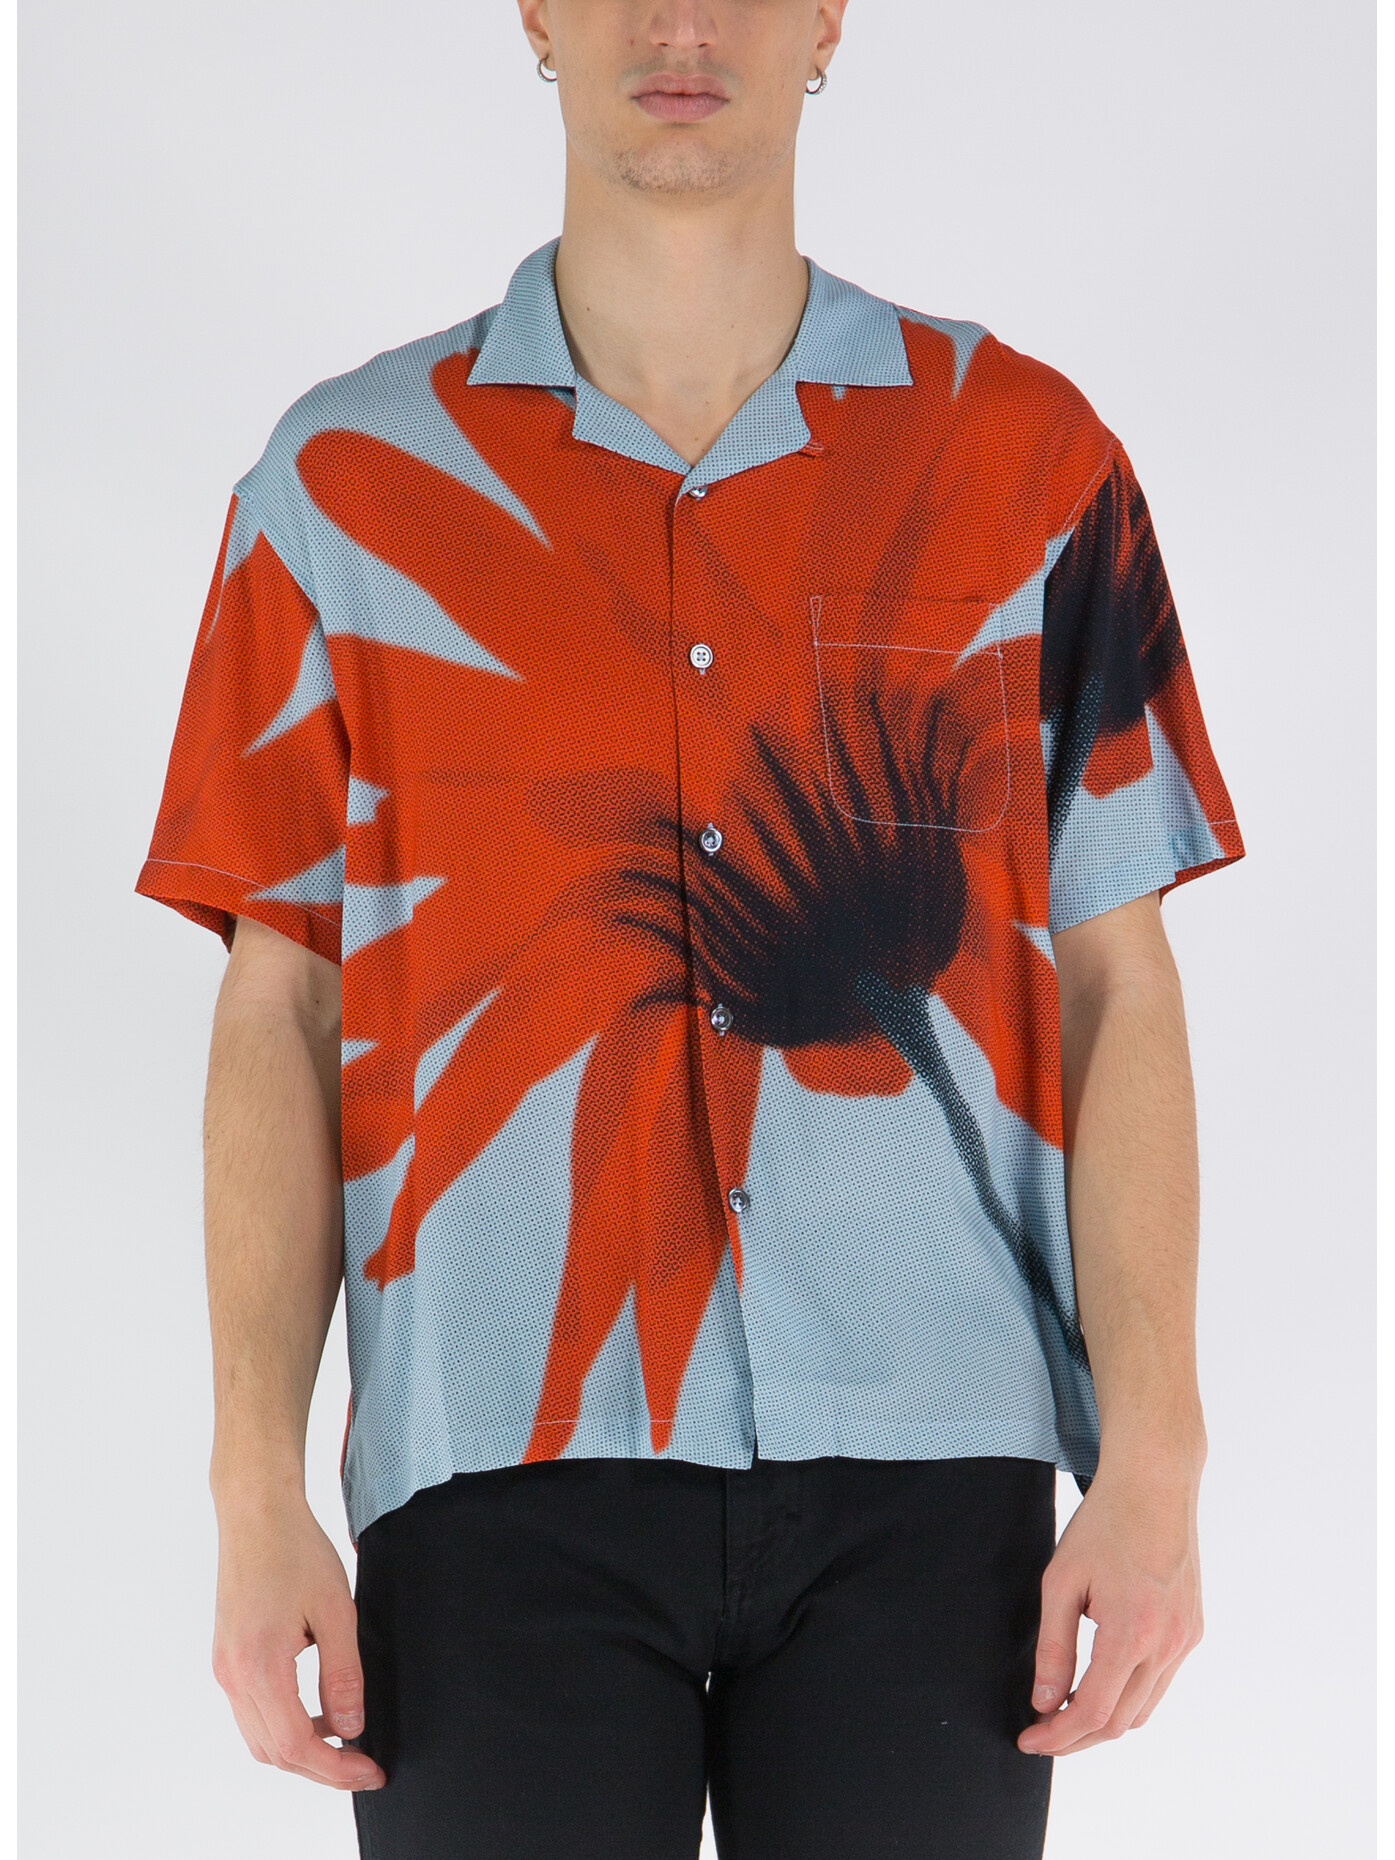 stÜssy camicia halftone flower shirt, uomo